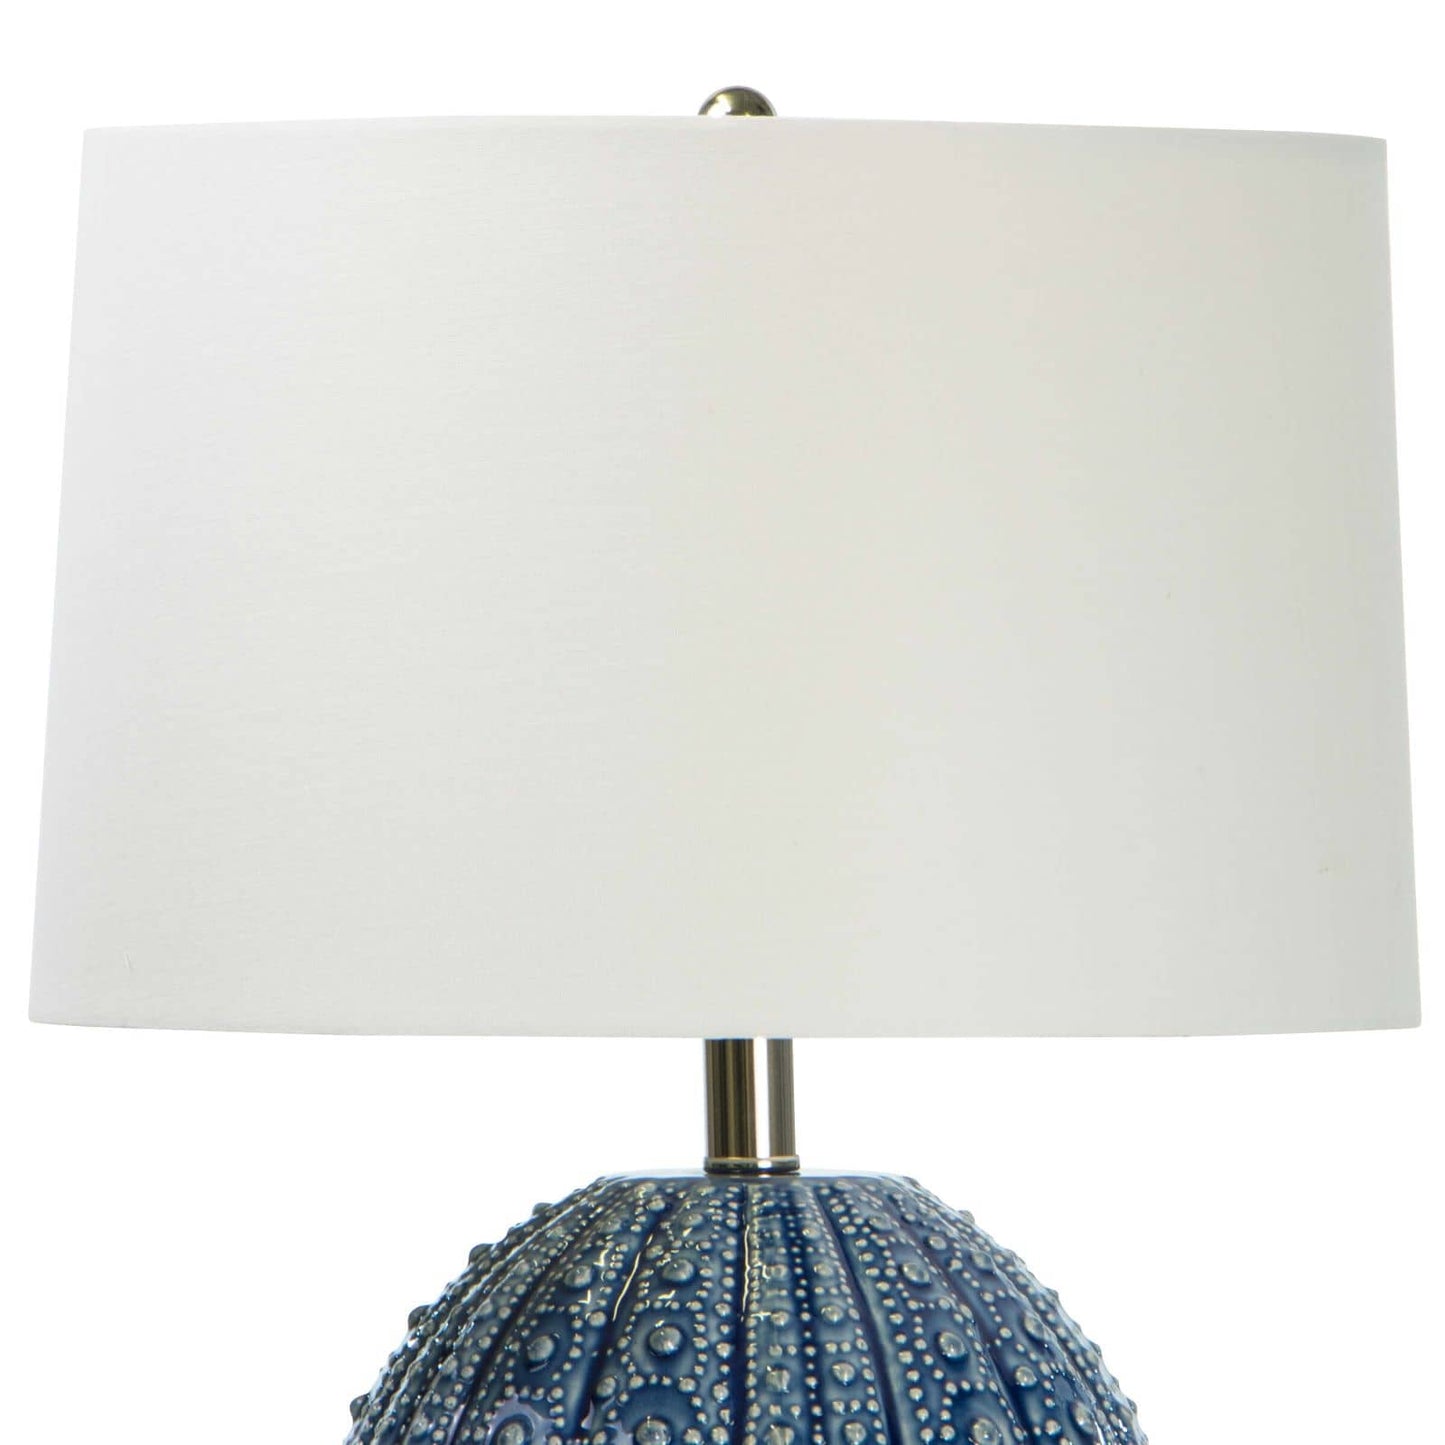 Sanibel Ceramic Table Lamp in Blue by Coastal Living